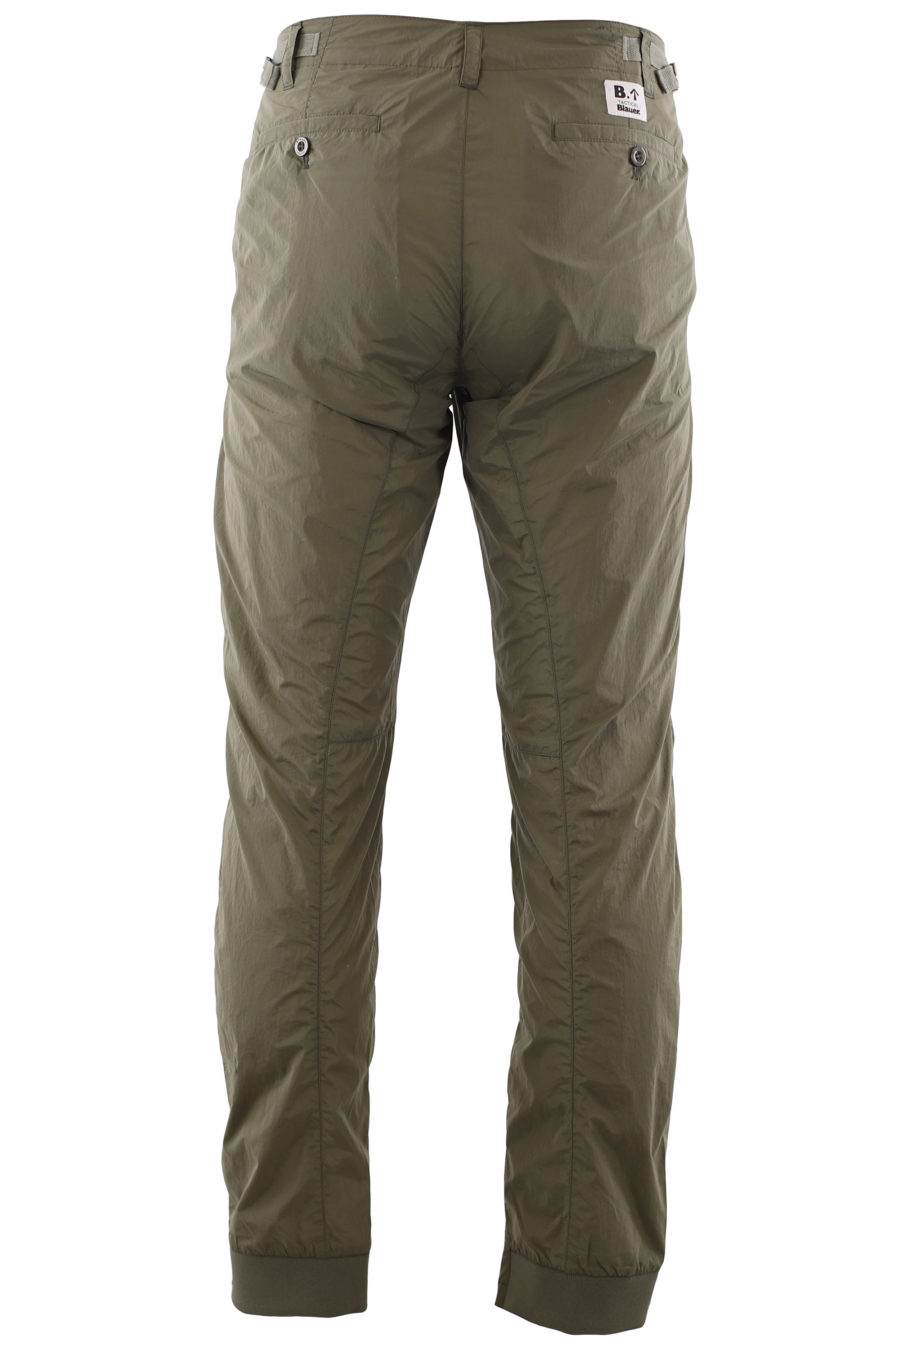 Pantalón largo "Tactical" color verde militar - IMG 6663